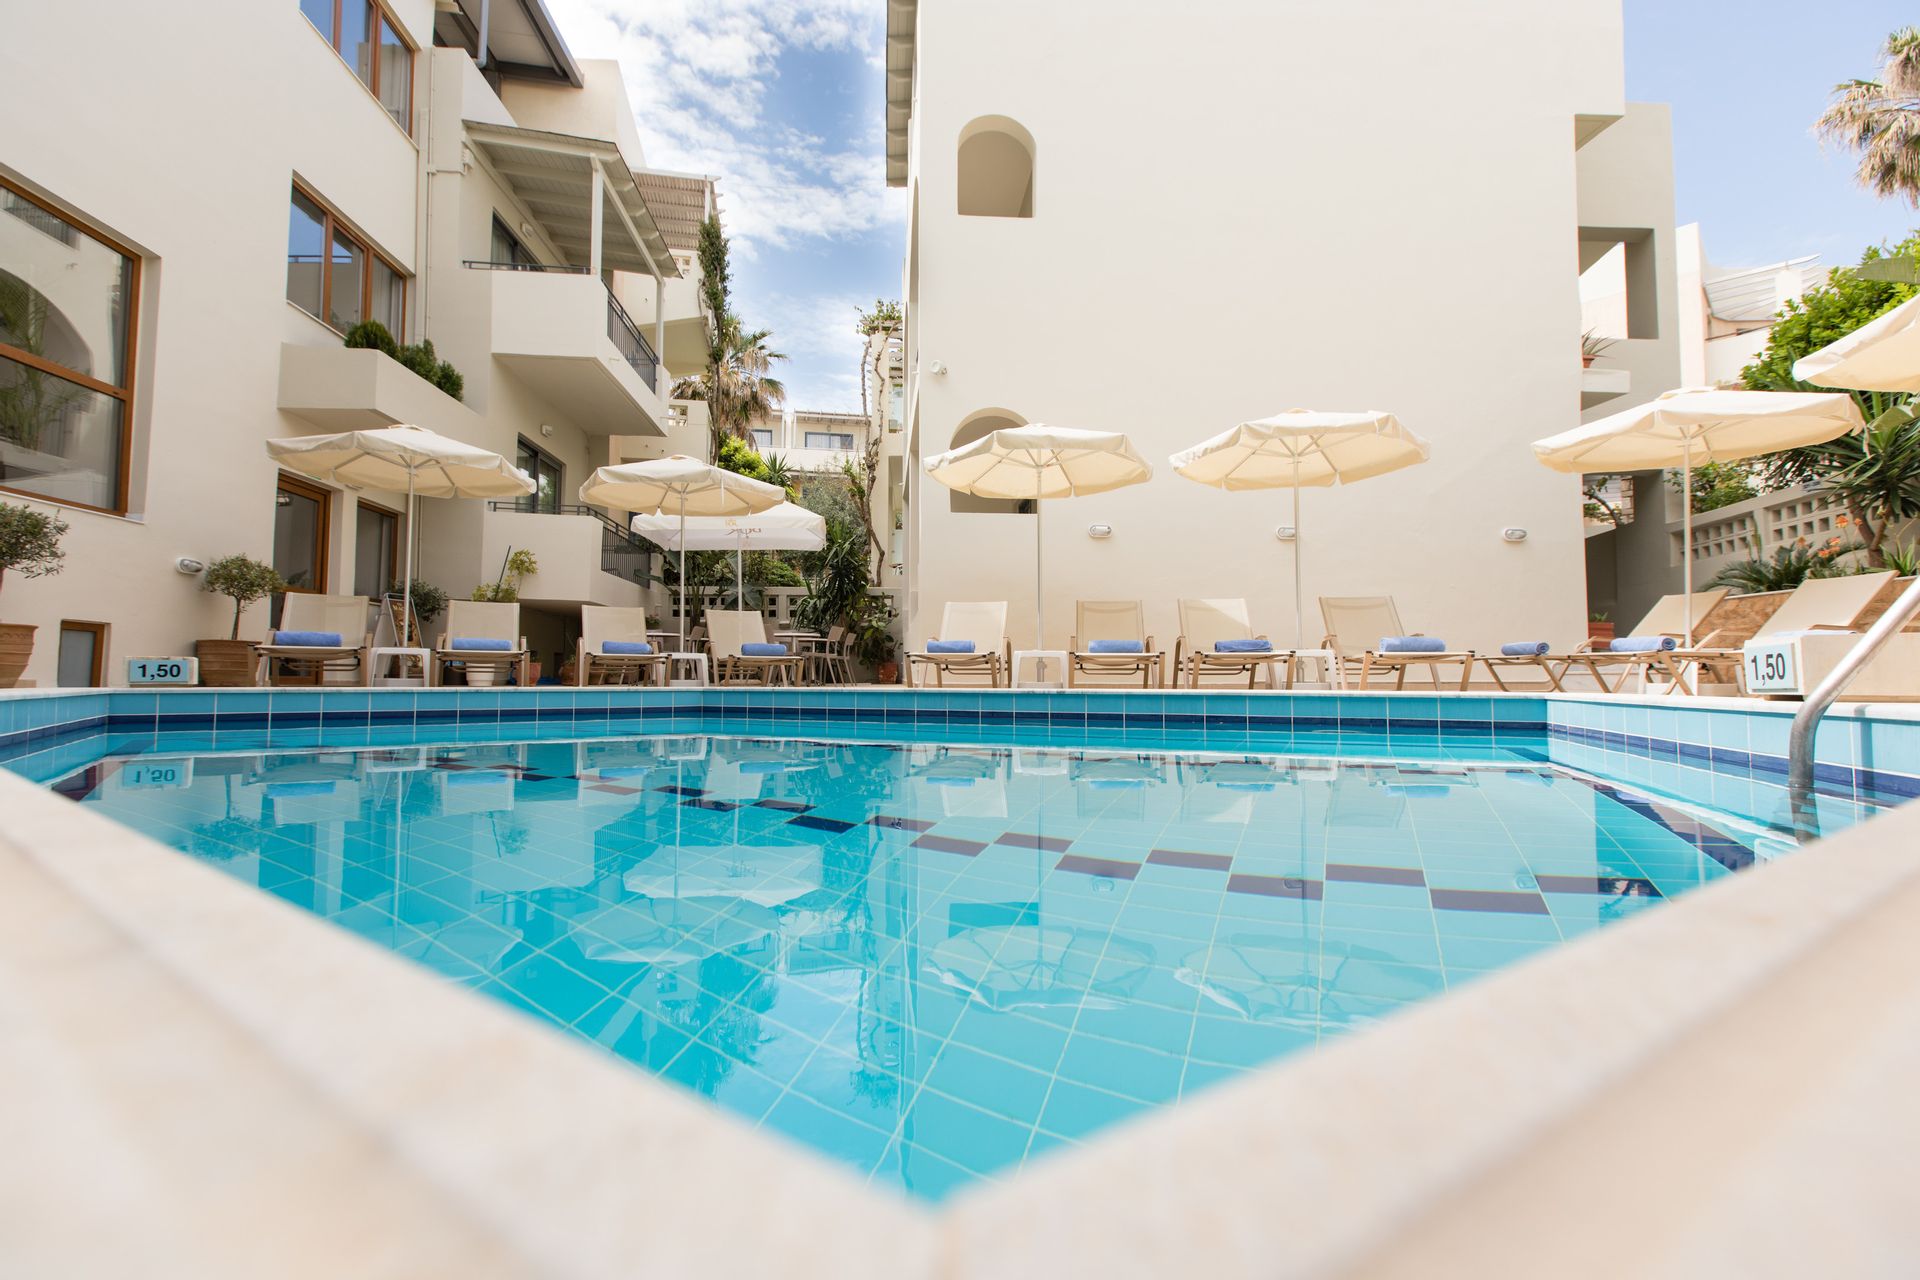 Anita Beach Hotel - Ρέθυμνο, Κρήτη ✦ 2 Ημέρες (1 Διανυκτέρευση) ✦ 2 άτομα ✦ 2 ✦ 09/05/2022 έως 30/09/2022 ✦ Δίπλα στην παραλία!